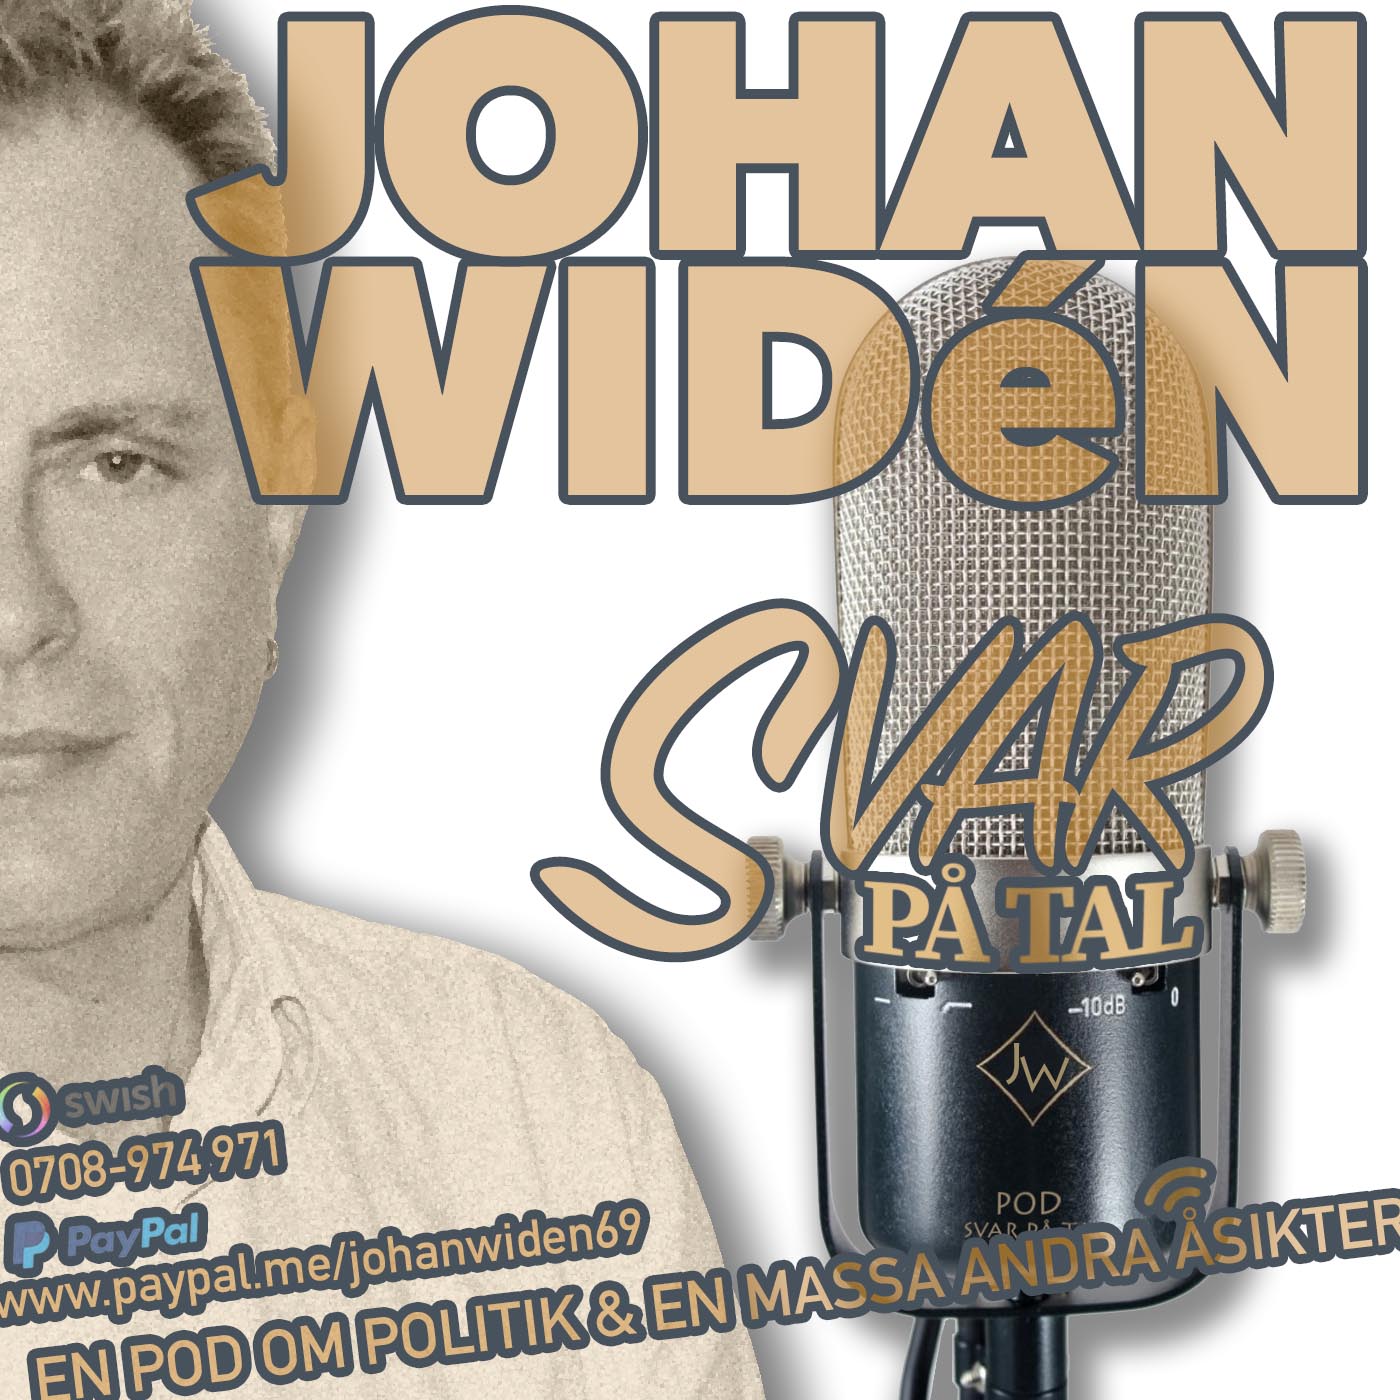 Johan Widén Svar På Tal logo